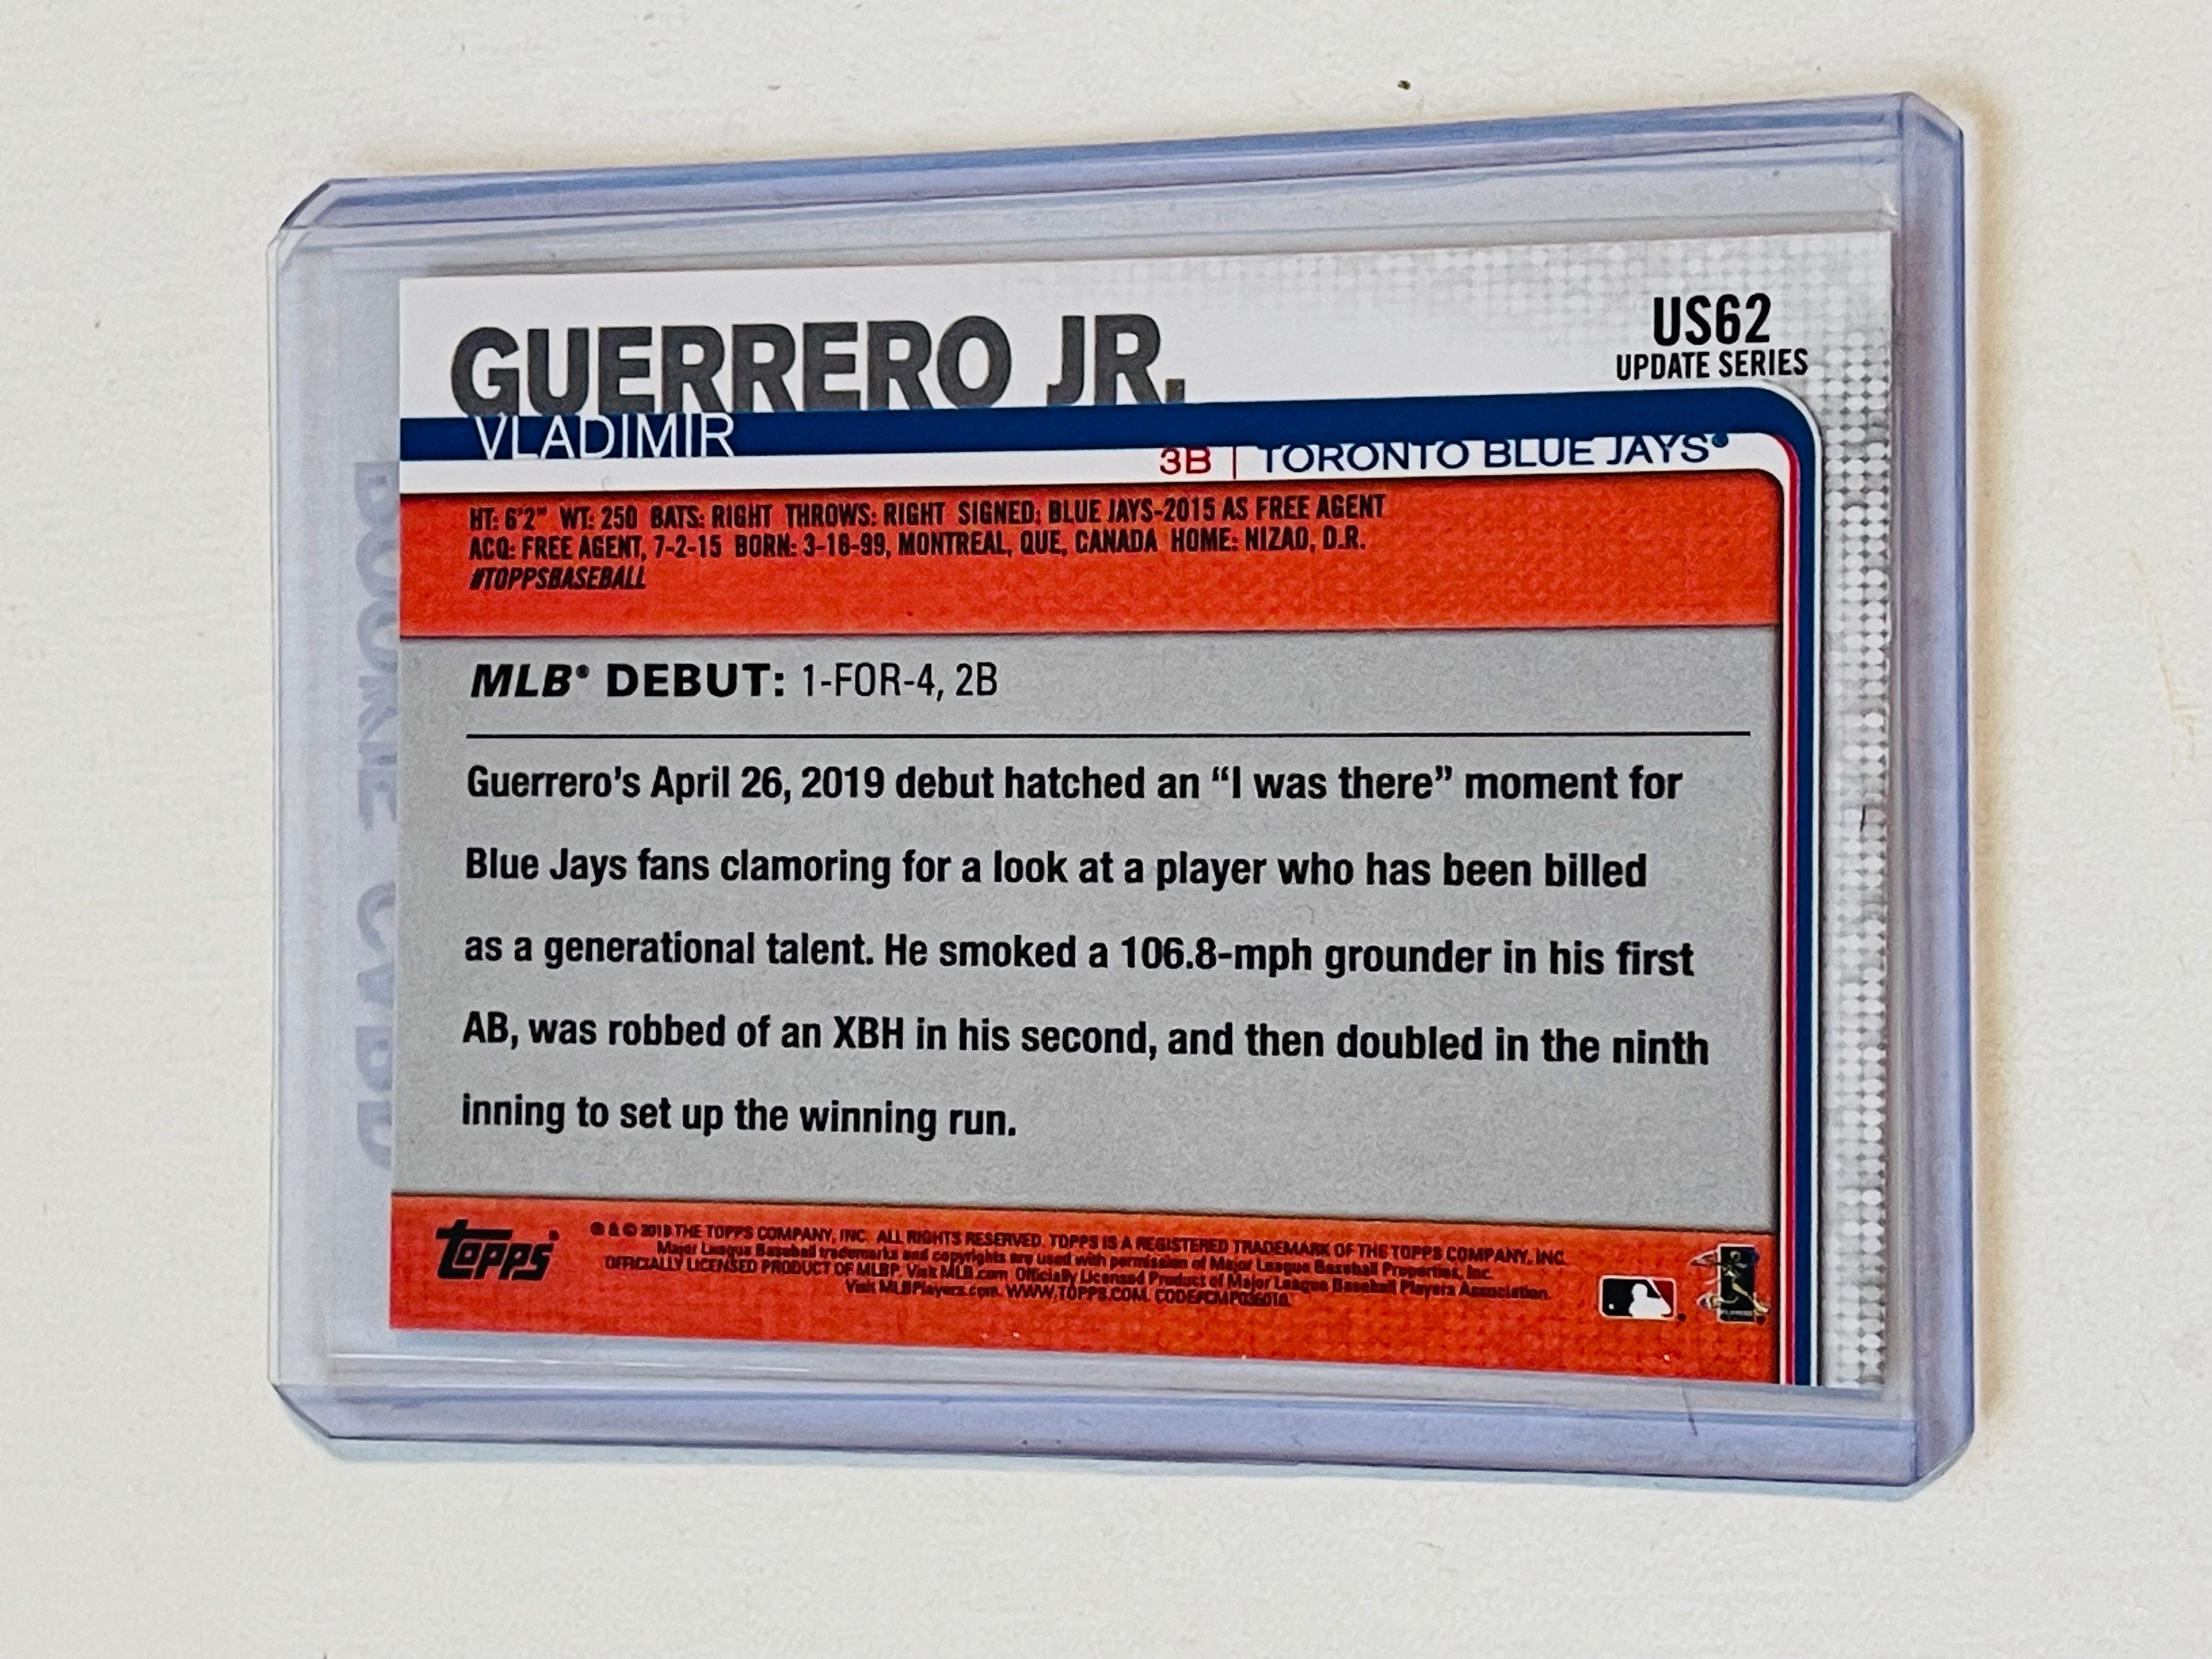 Vladimir Guerrero jr Topps baseball rookie card